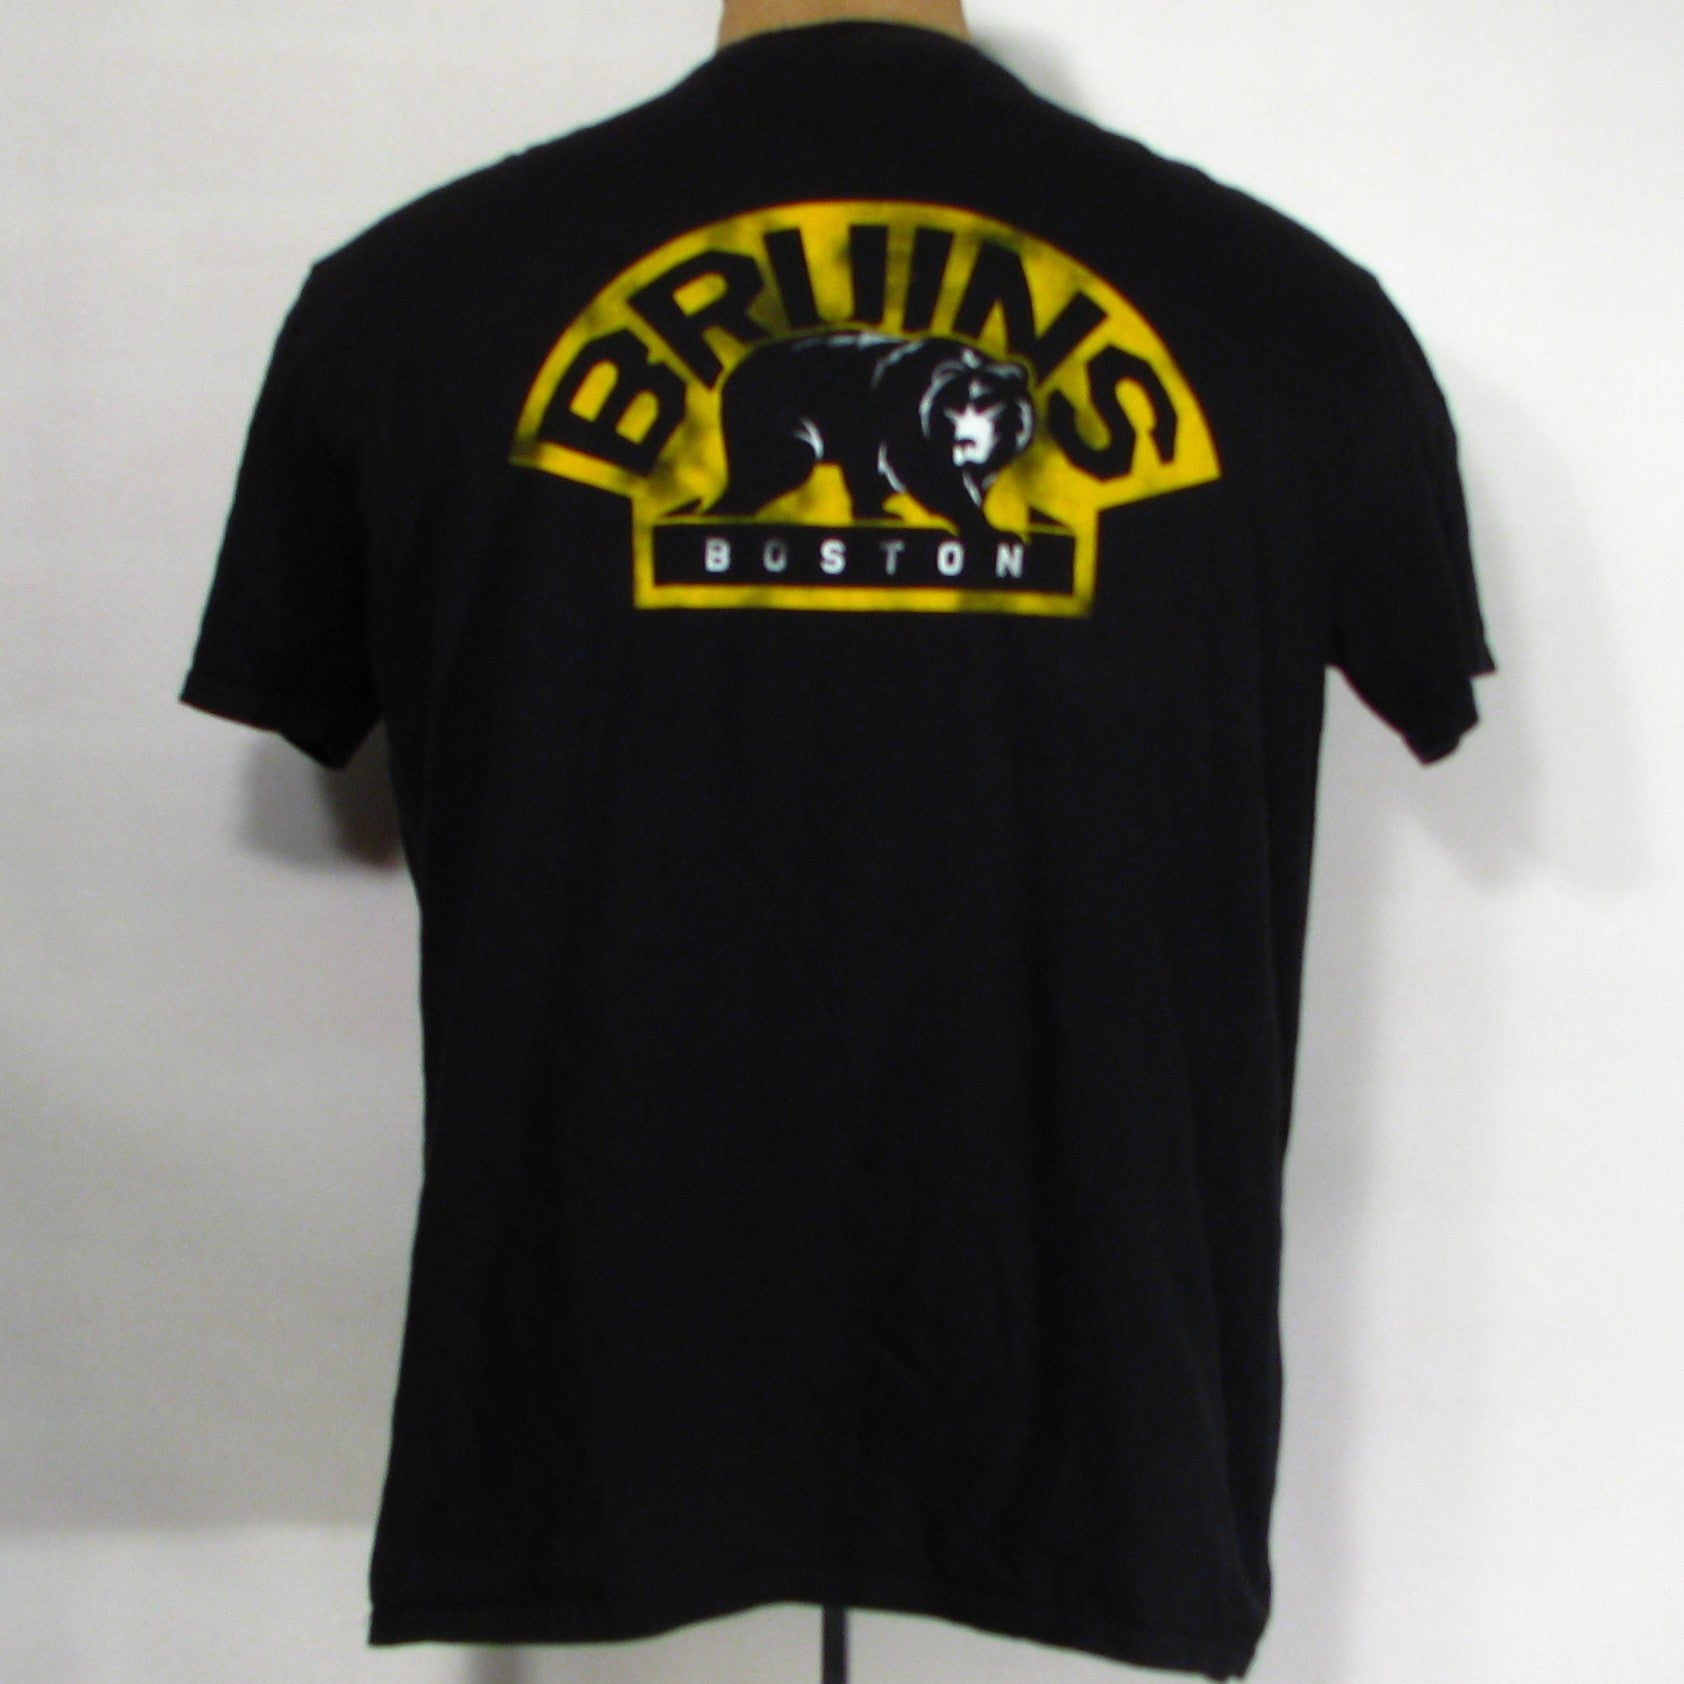 Jack Daniels/Boston Bruins T-Shirt 